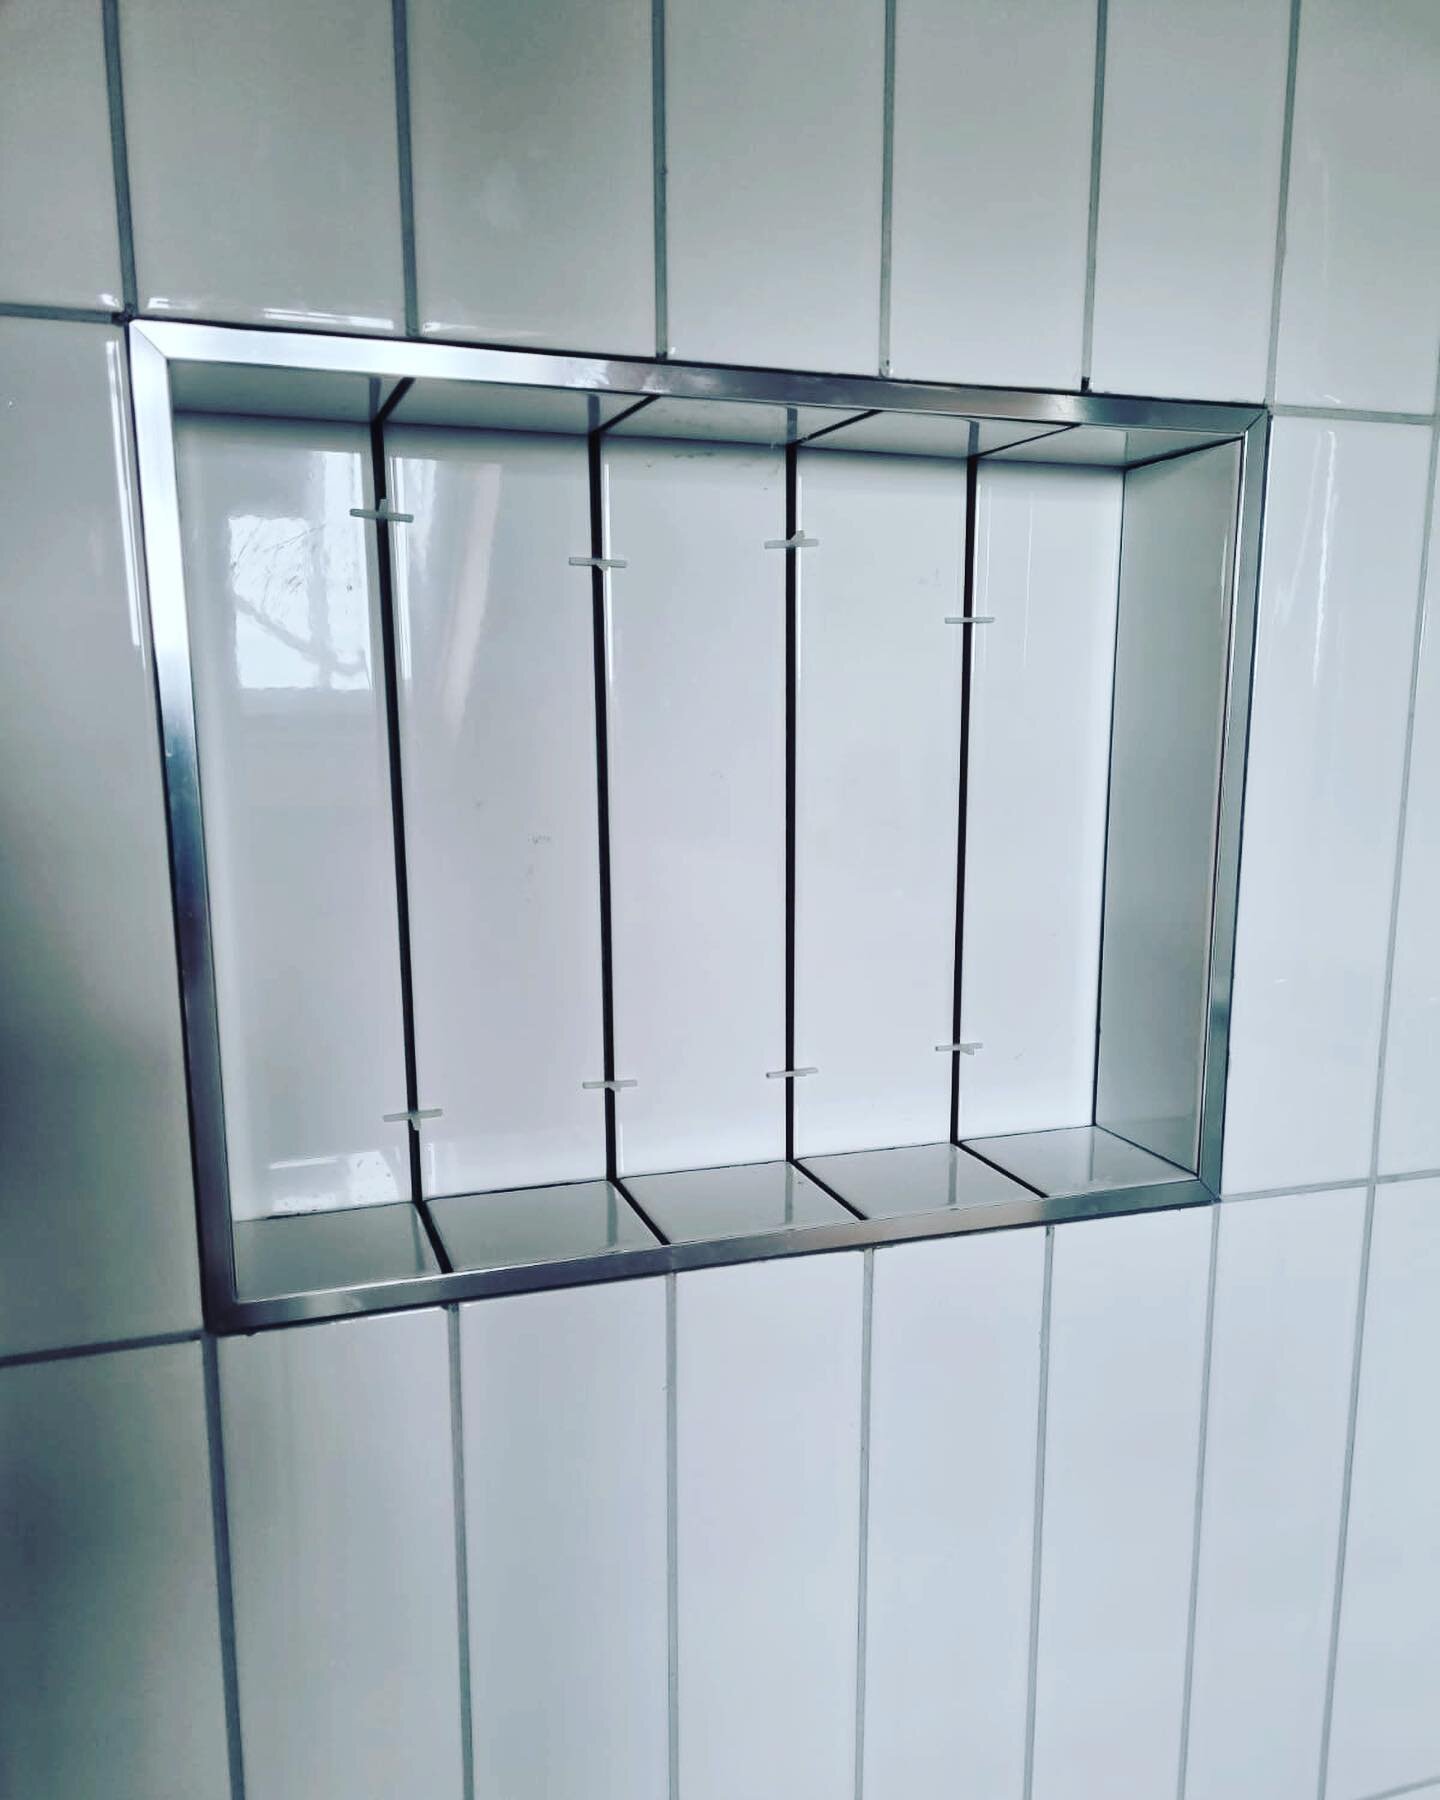 Storage shelf in bathroom, love putting these into peoples bathrooms for all their bottles! #storage #bathroom #tiling #tiles #bottles #plastering #builder #carpentry #carpenter #bromley #beckenham #chislehurst #renovation #inspiration